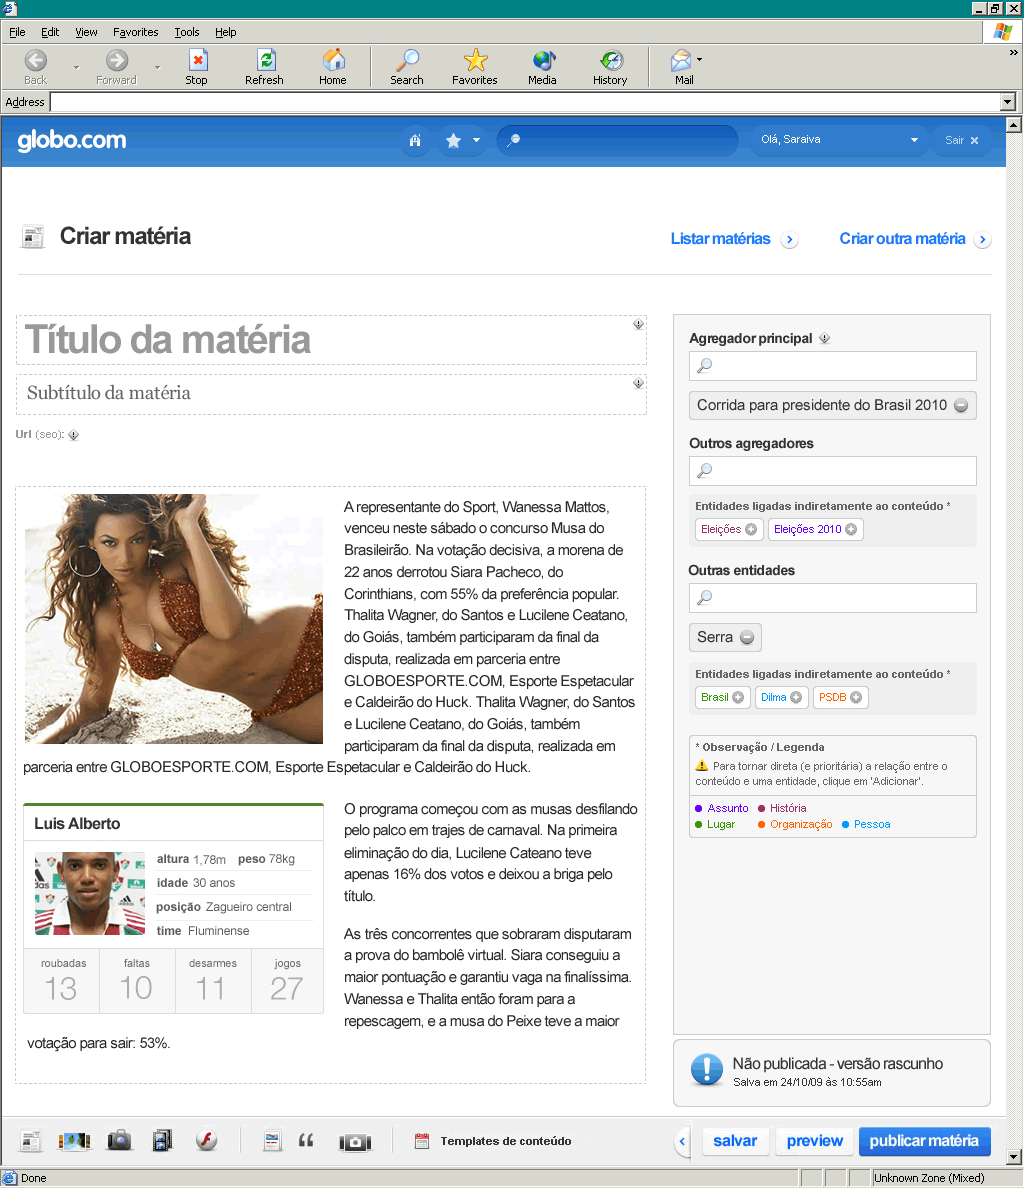 Globo.com's semantic platform